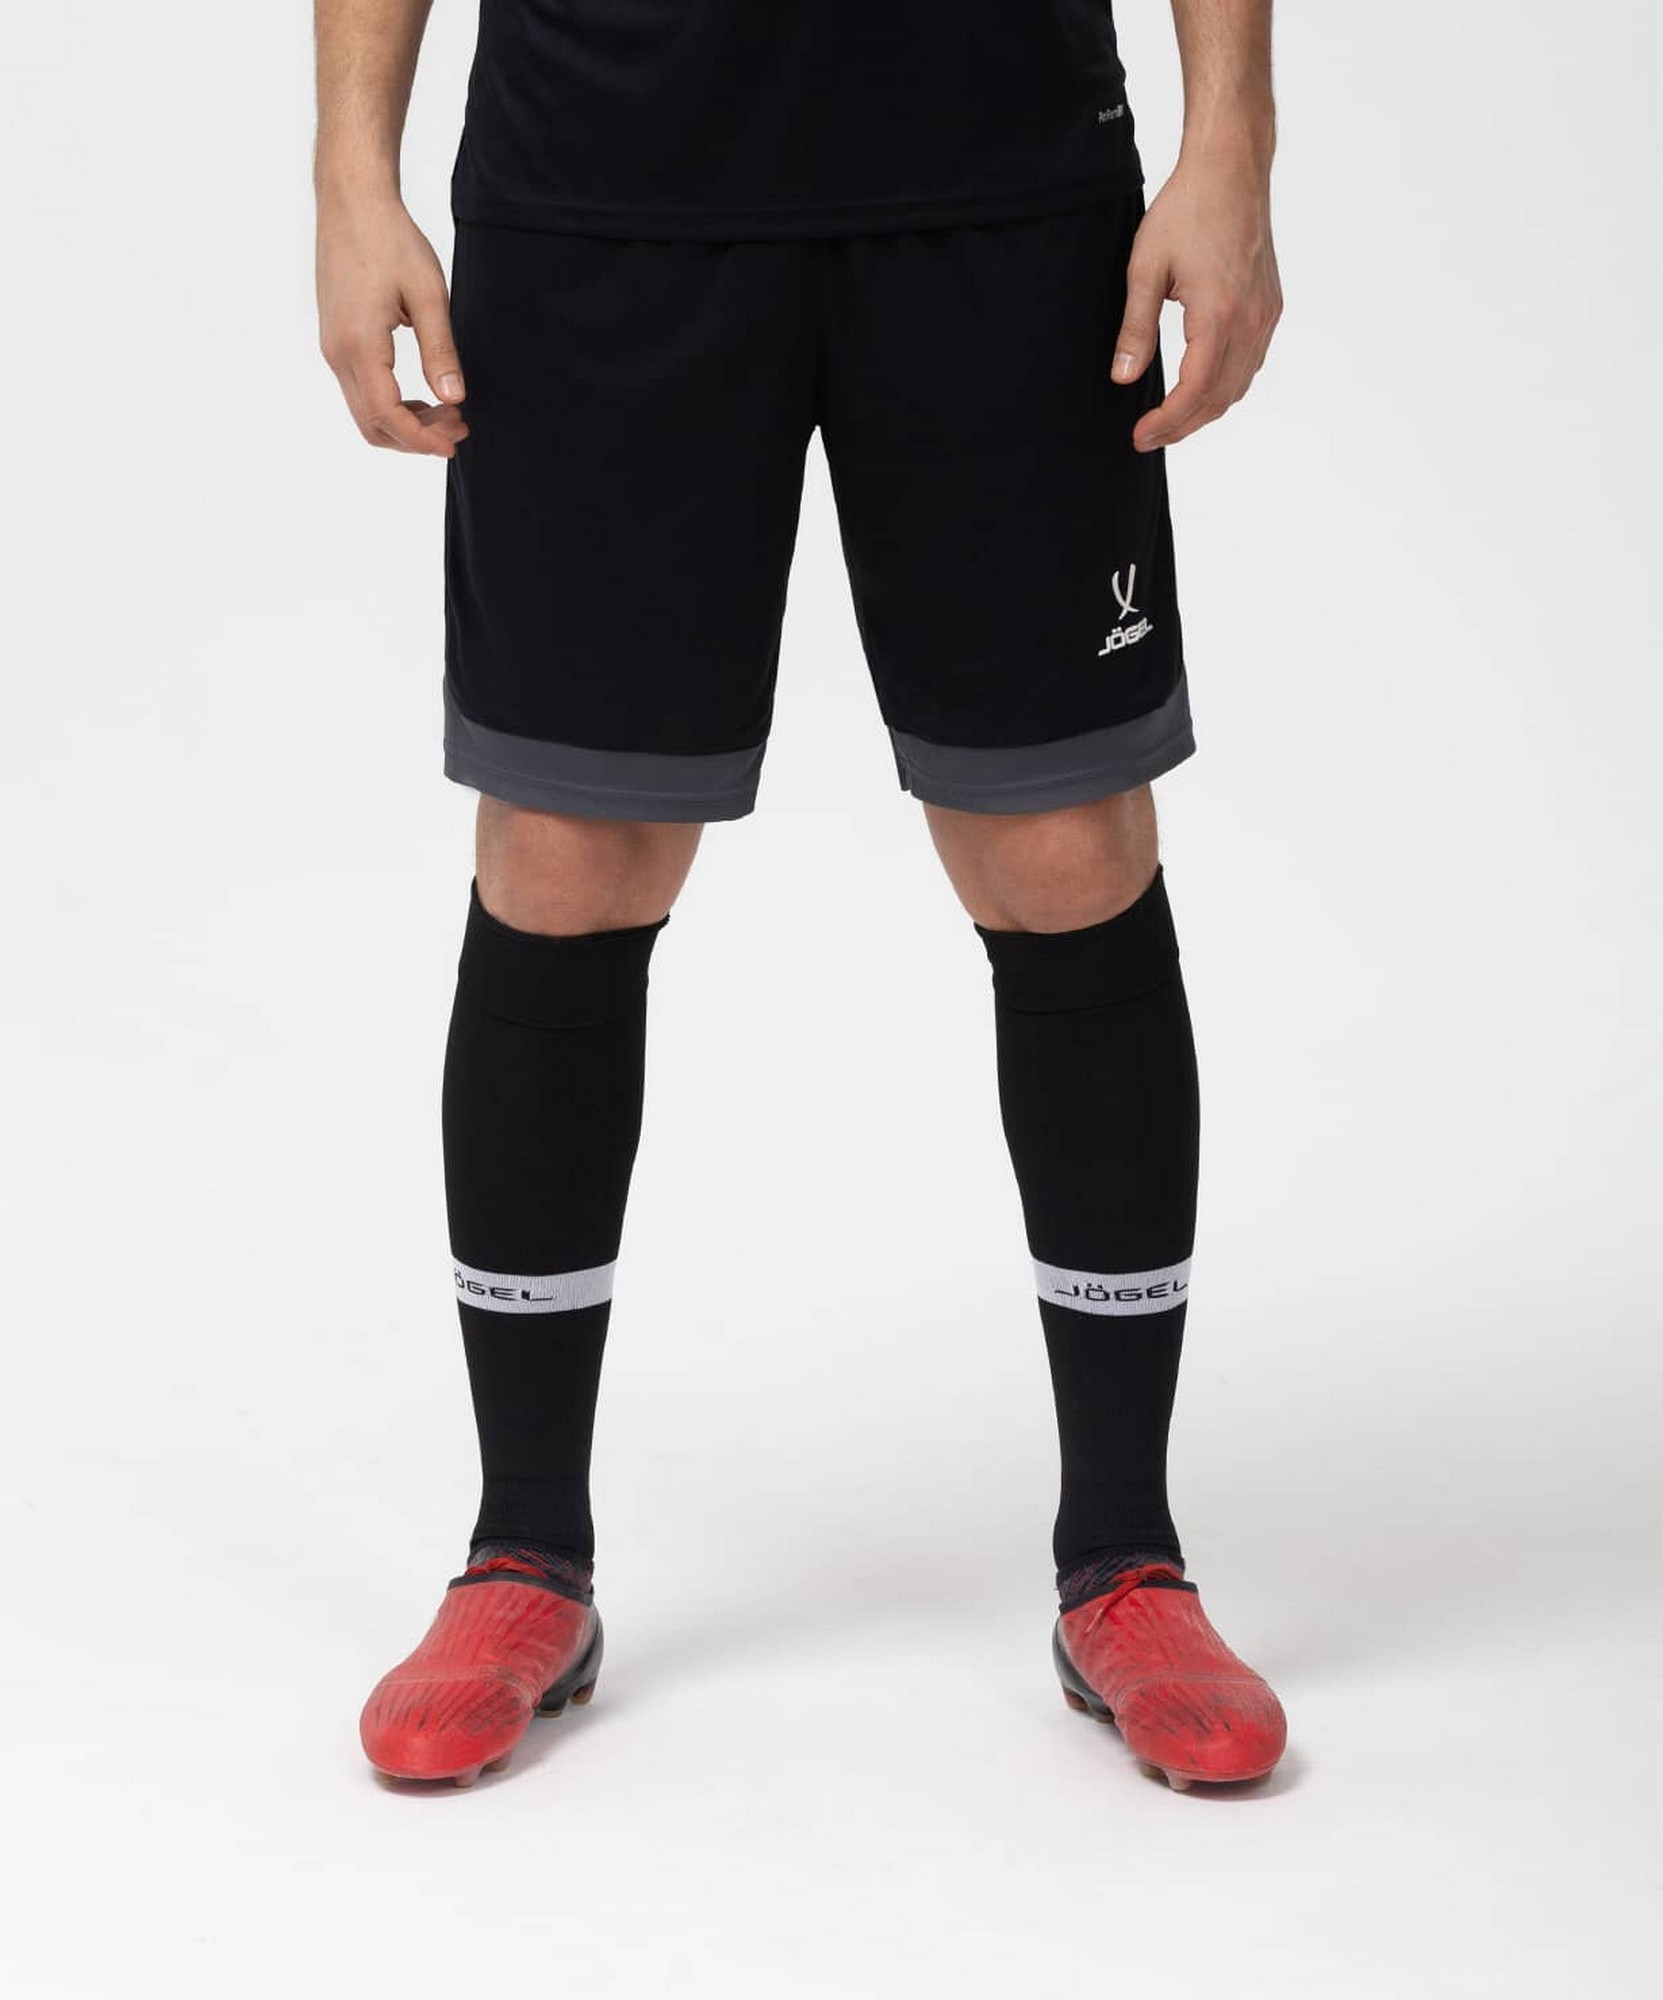 Гетры футбольные Jogel Camp Advanced Socks, черный\белый 1663_2000